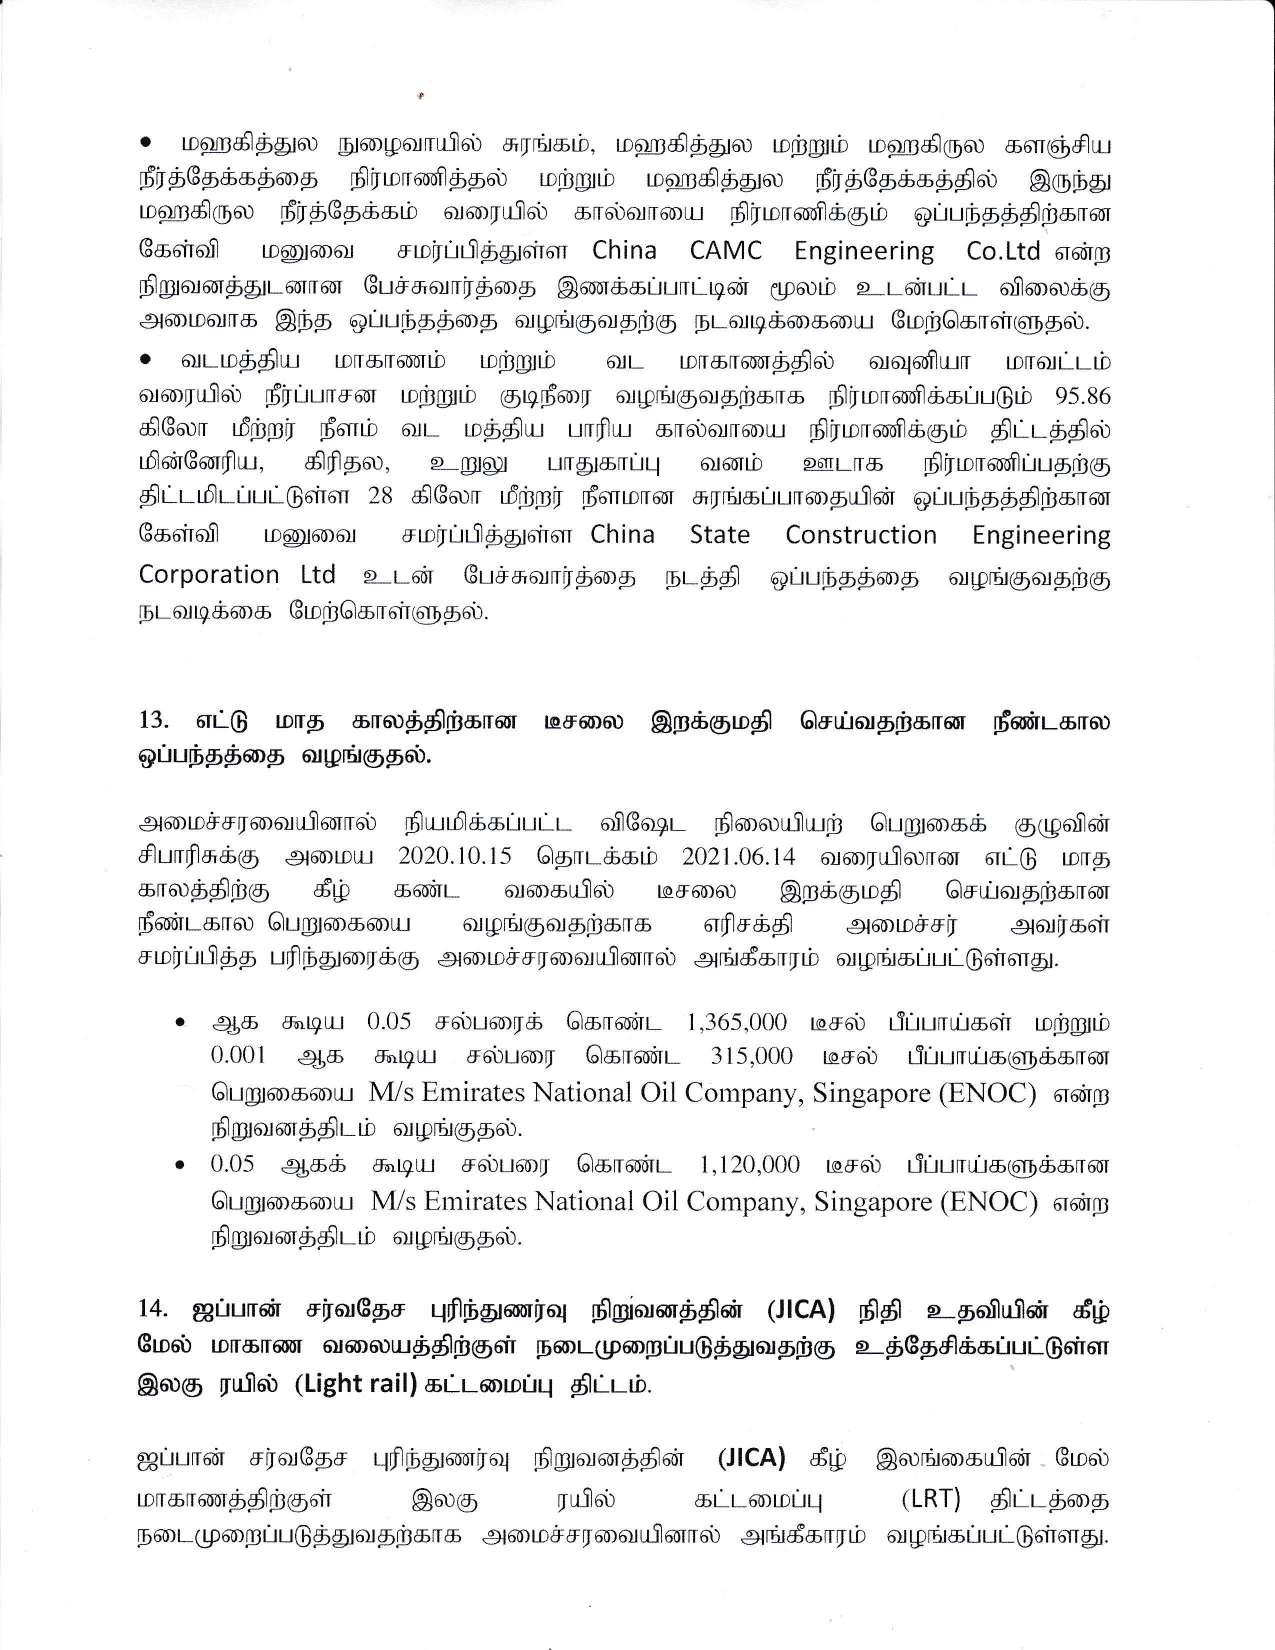 cabinet Desicion on 28.09.2020 Tamil 1 page 008